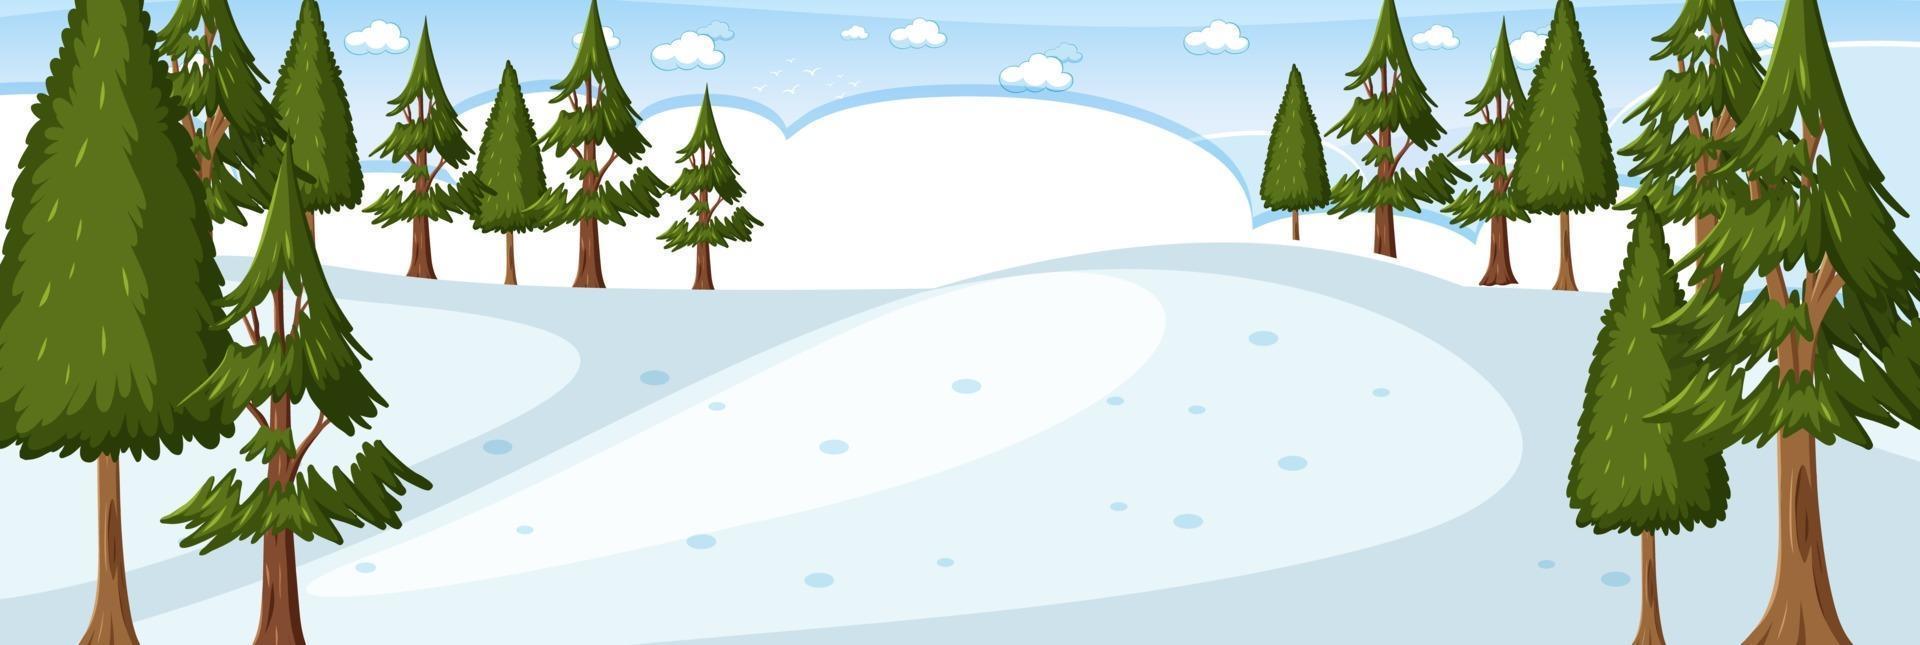 Blank winter forest horizontal landscape scene vector